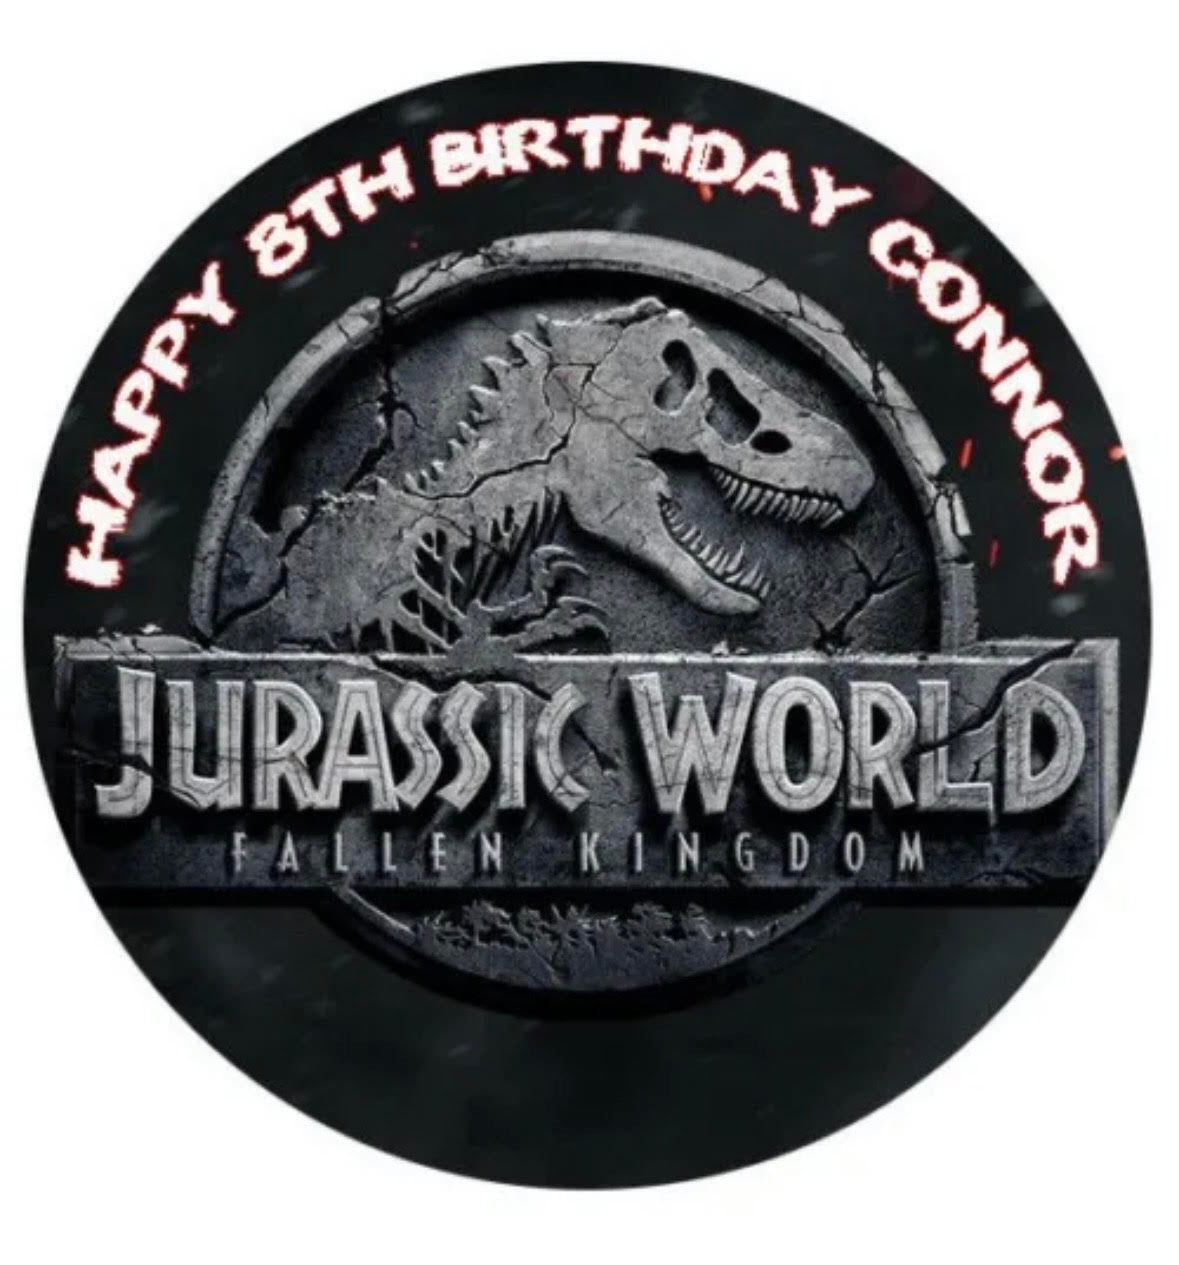 Jurassic World Round Cake Edible Icing Image Topper 19cm